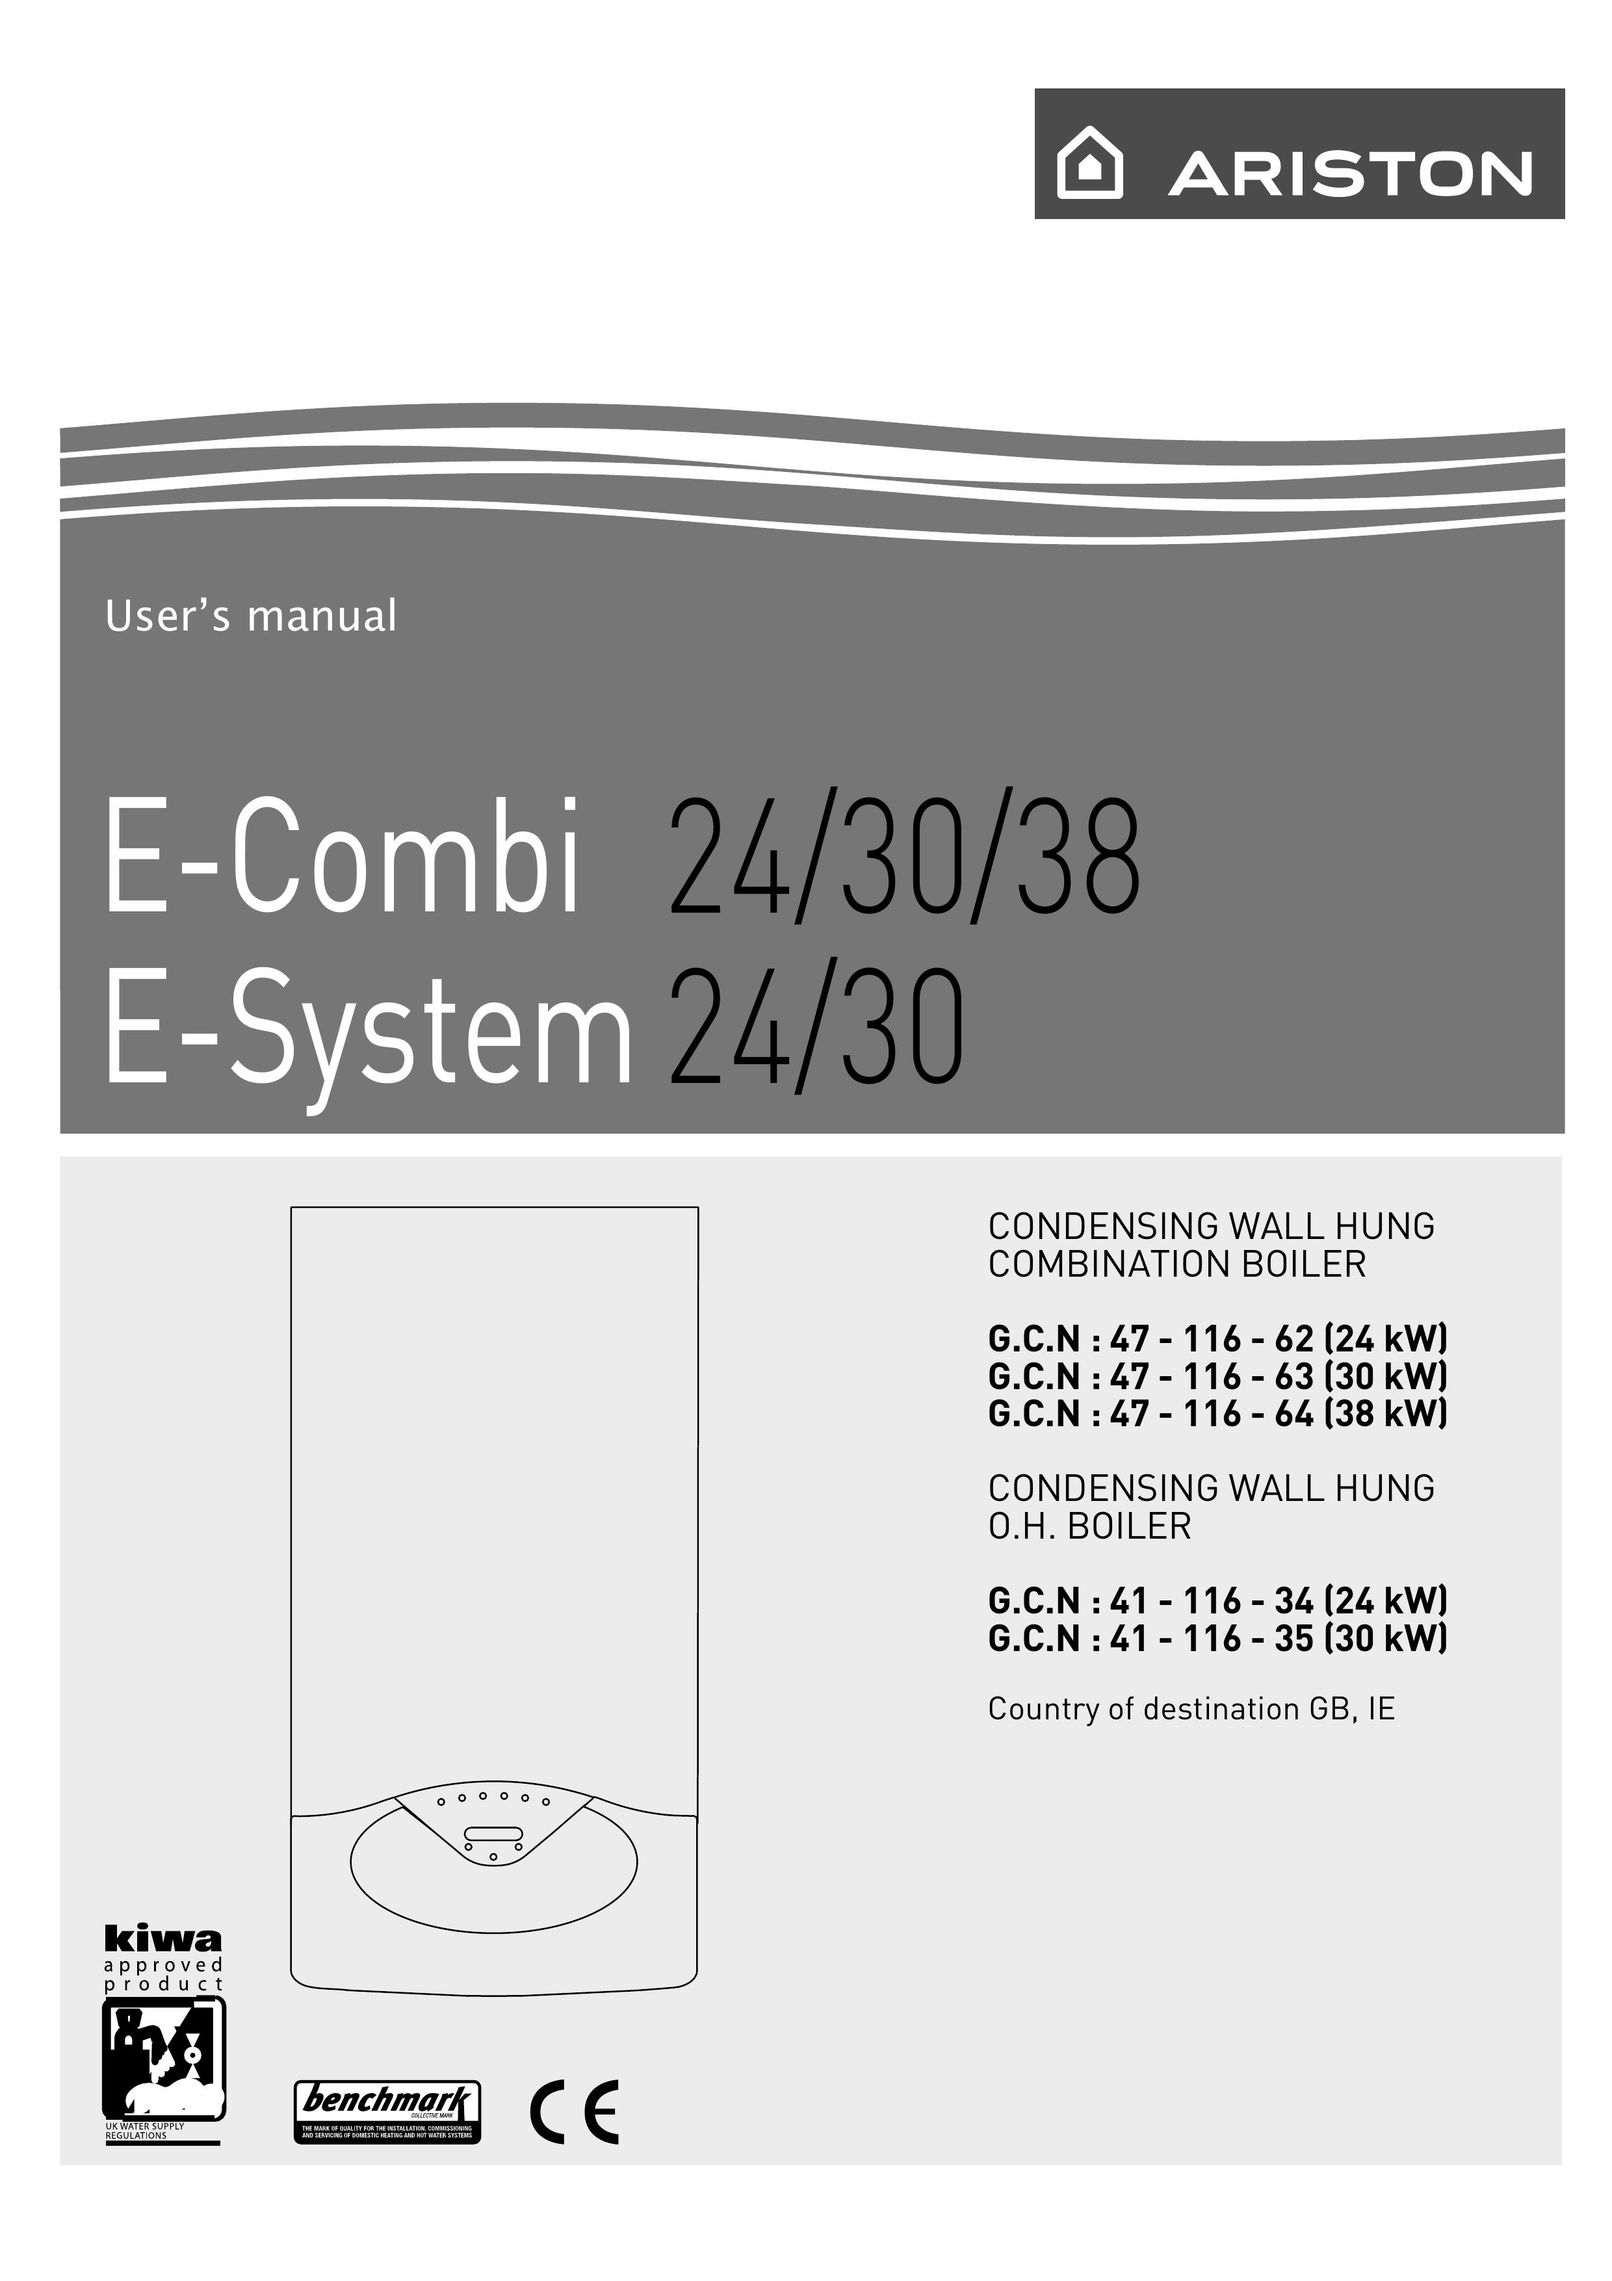 Ariston 47 - 116 - 62 Boiler User Manual